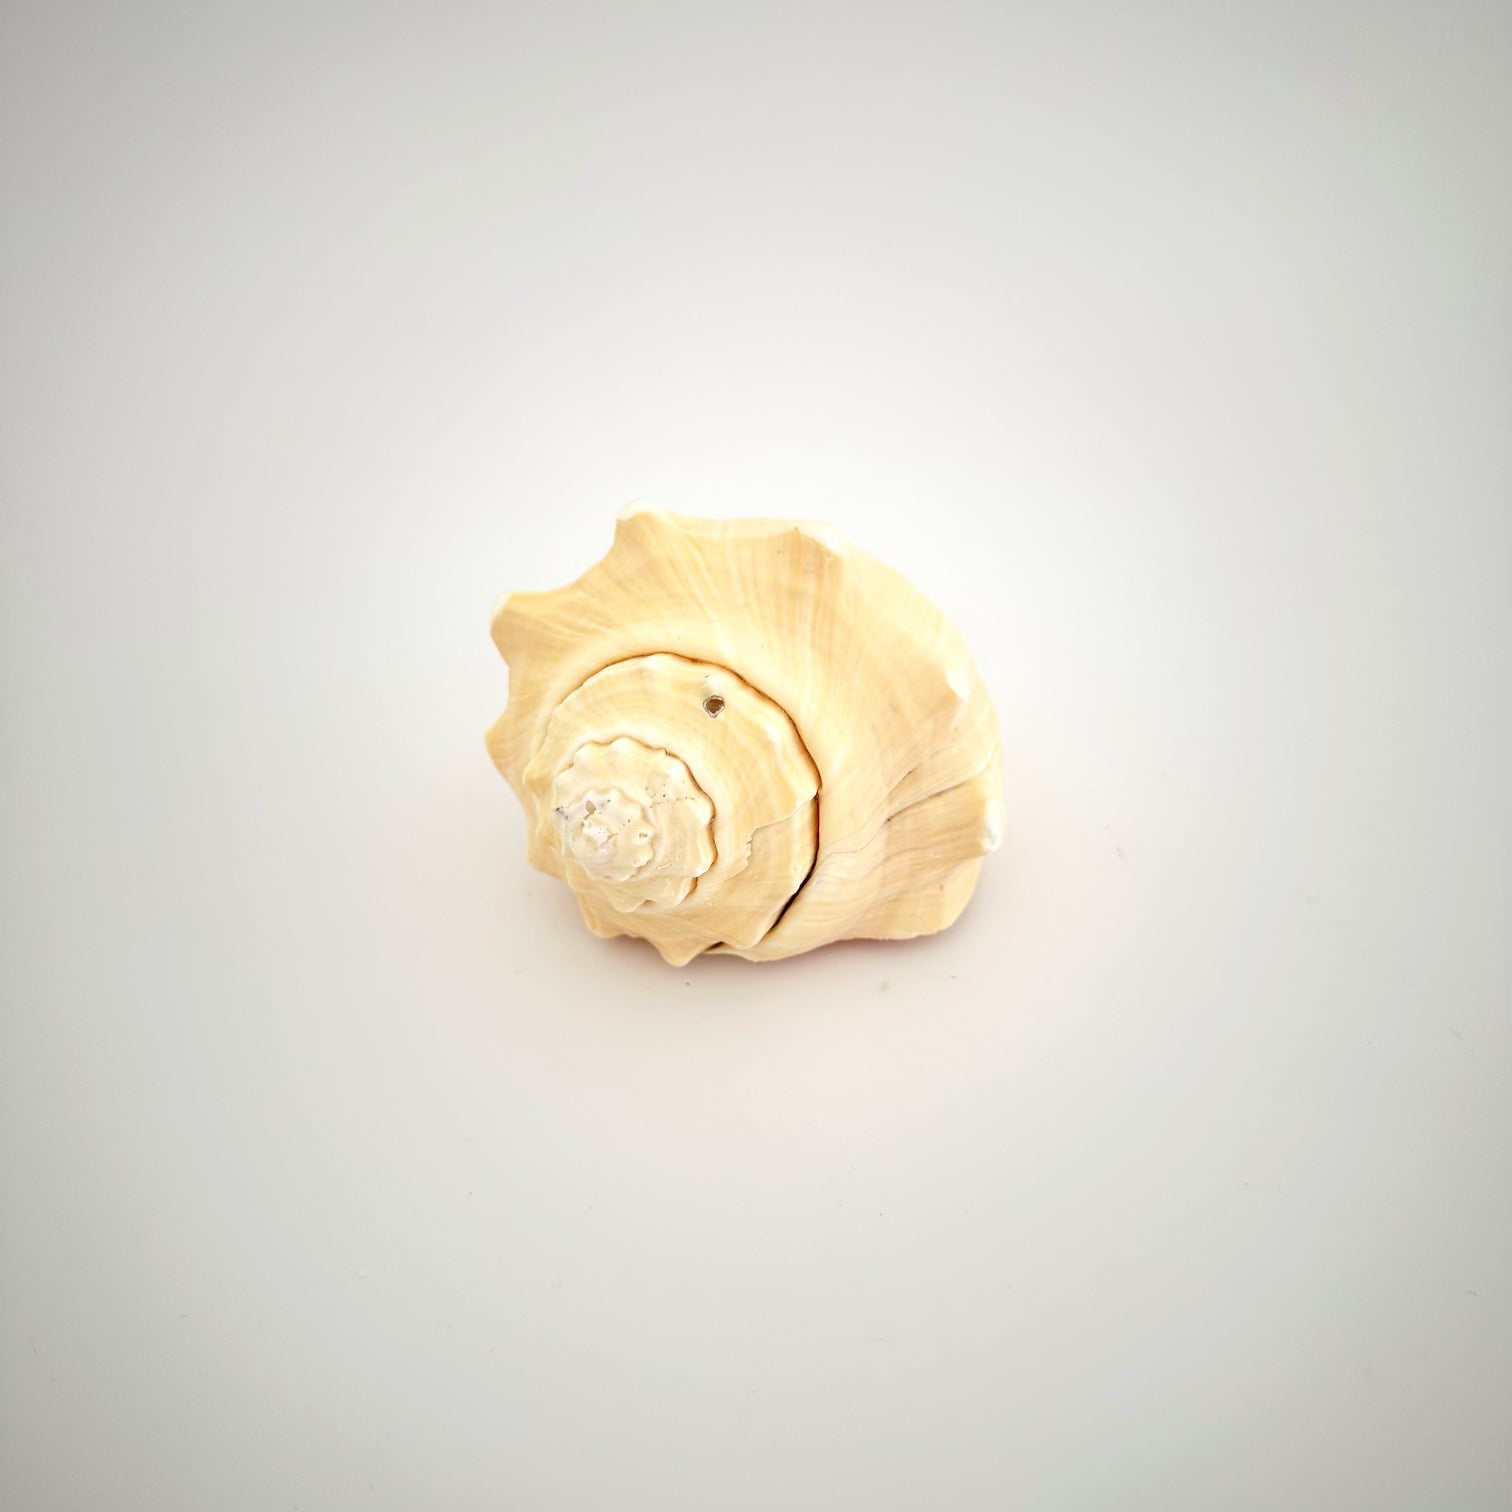 Hemifusus Conch Shell